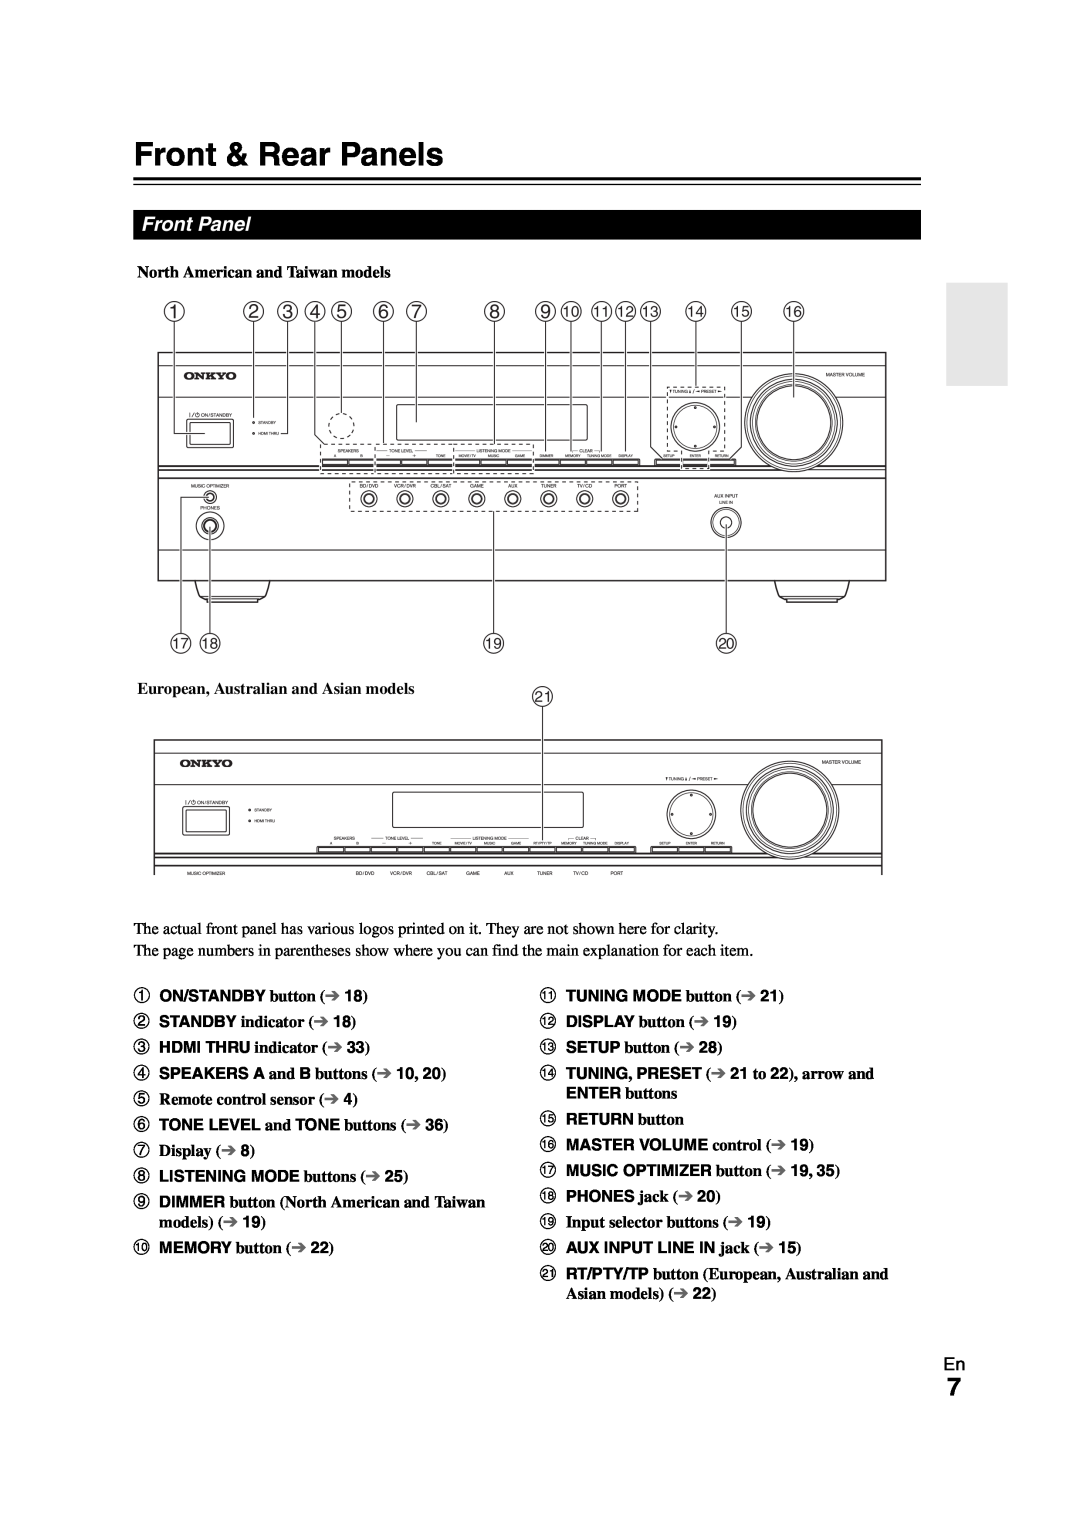 Onkyo SR308 Front & Rear Panels, Front Panel, b c d e f g, ij klm n o, aON/STANDBY button, cHDMI THRU indicator 